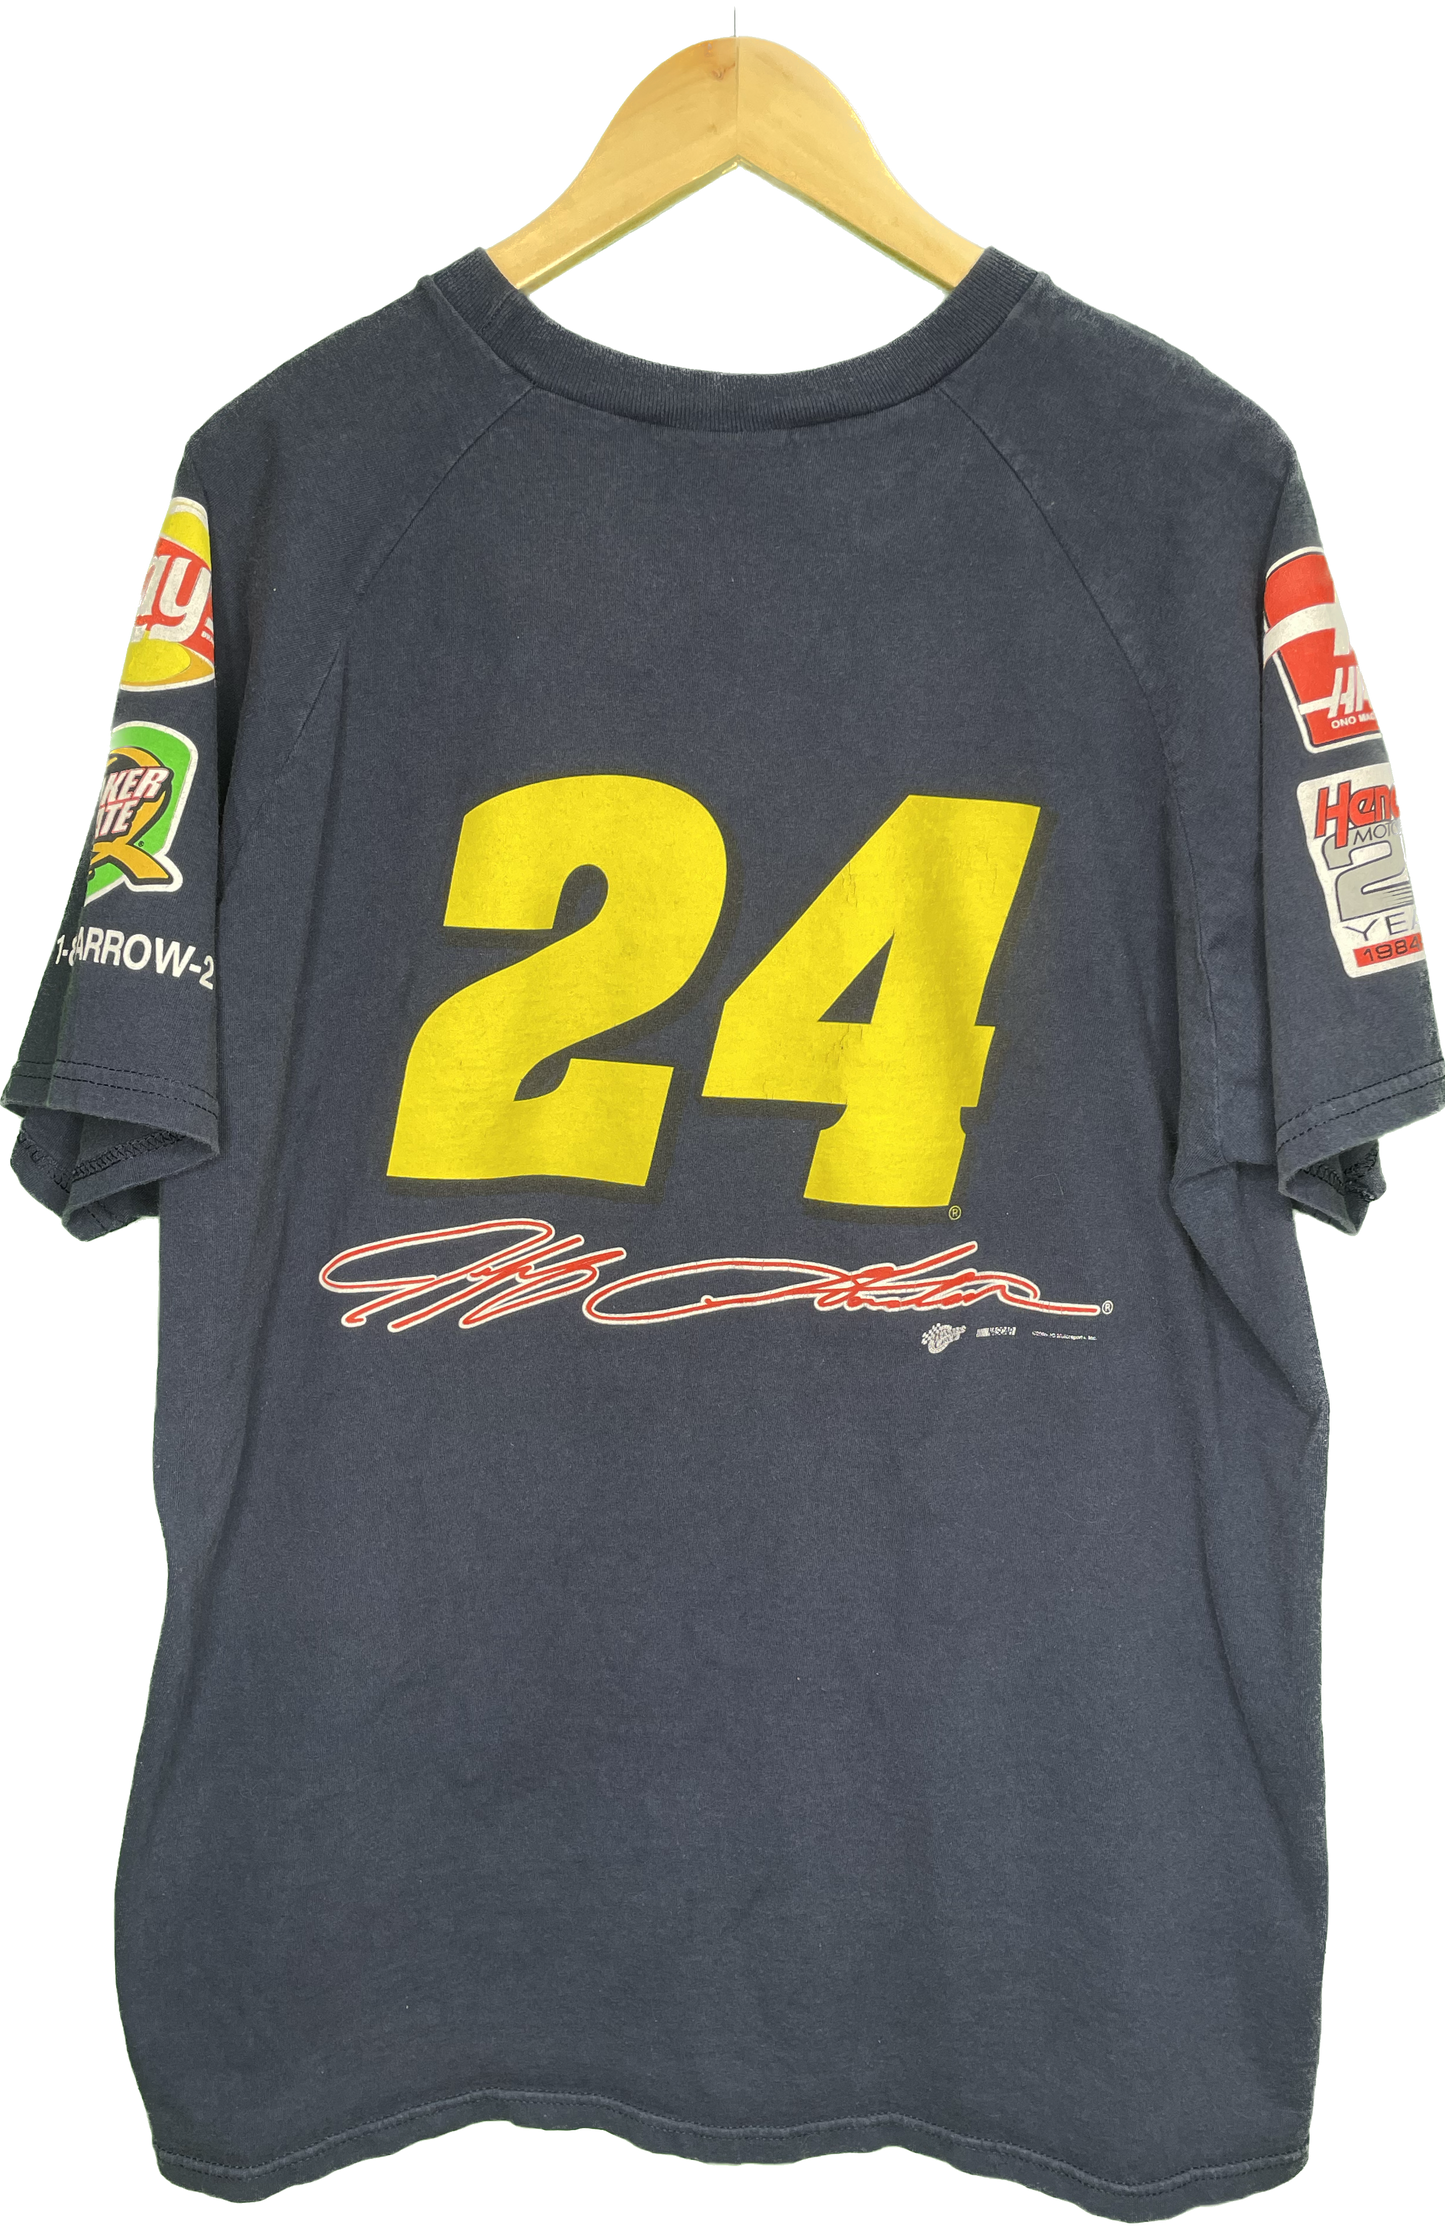 Vintage XL Jeff Gordon Du Pont Lays Quaker State Pepsi Nascar Racing T-Shirt